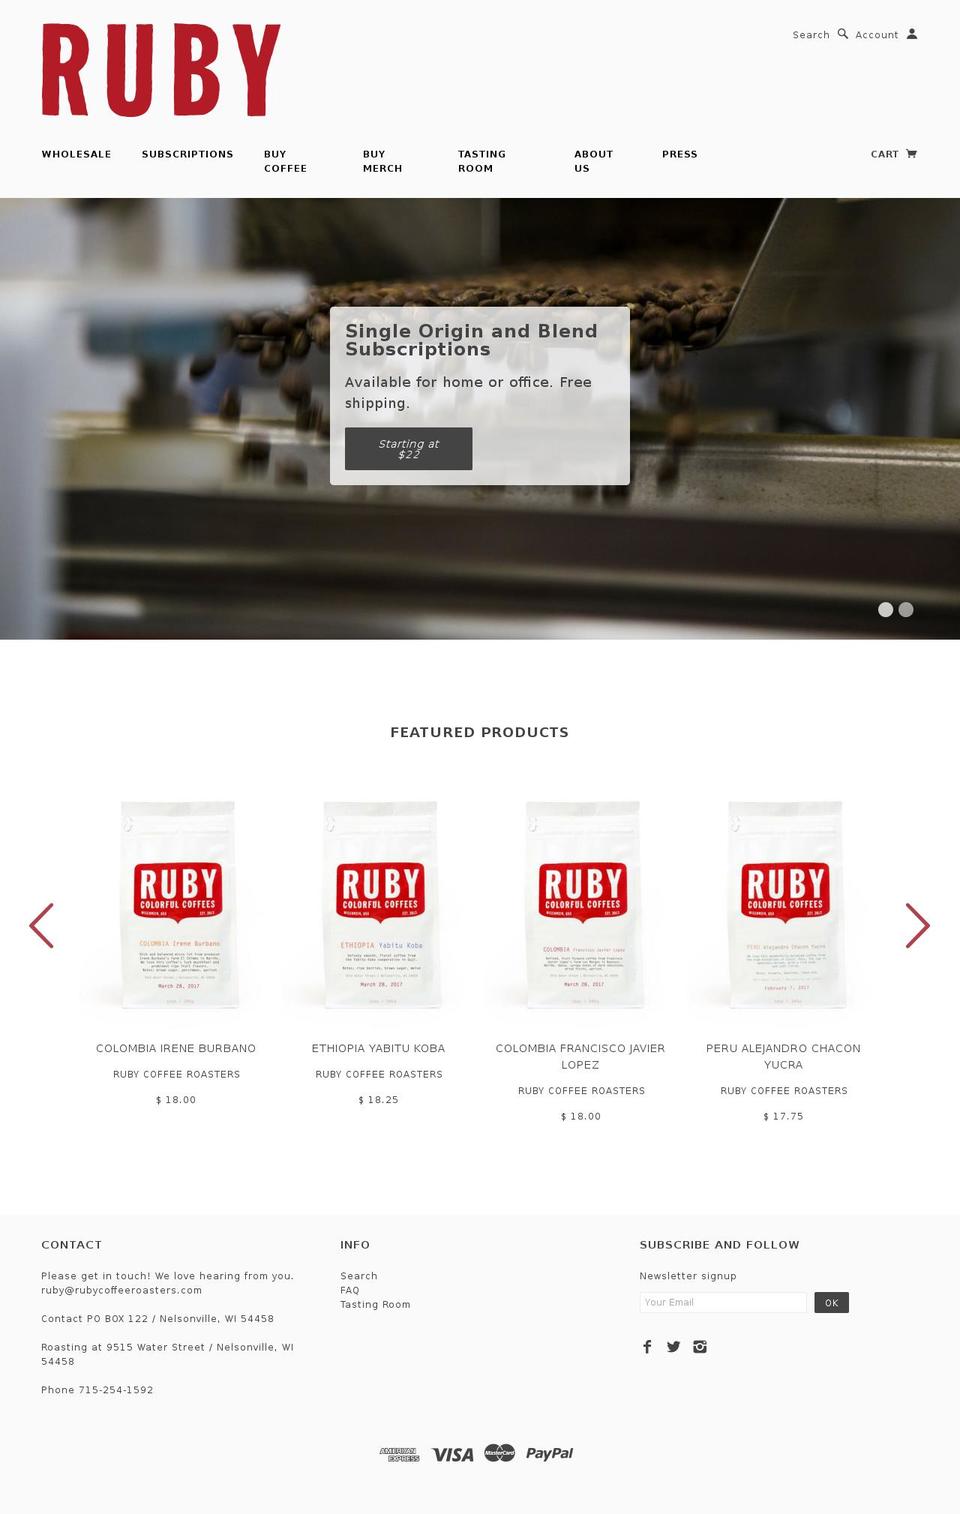 Venue Shopify theme site example rubycoffeeroasters.com